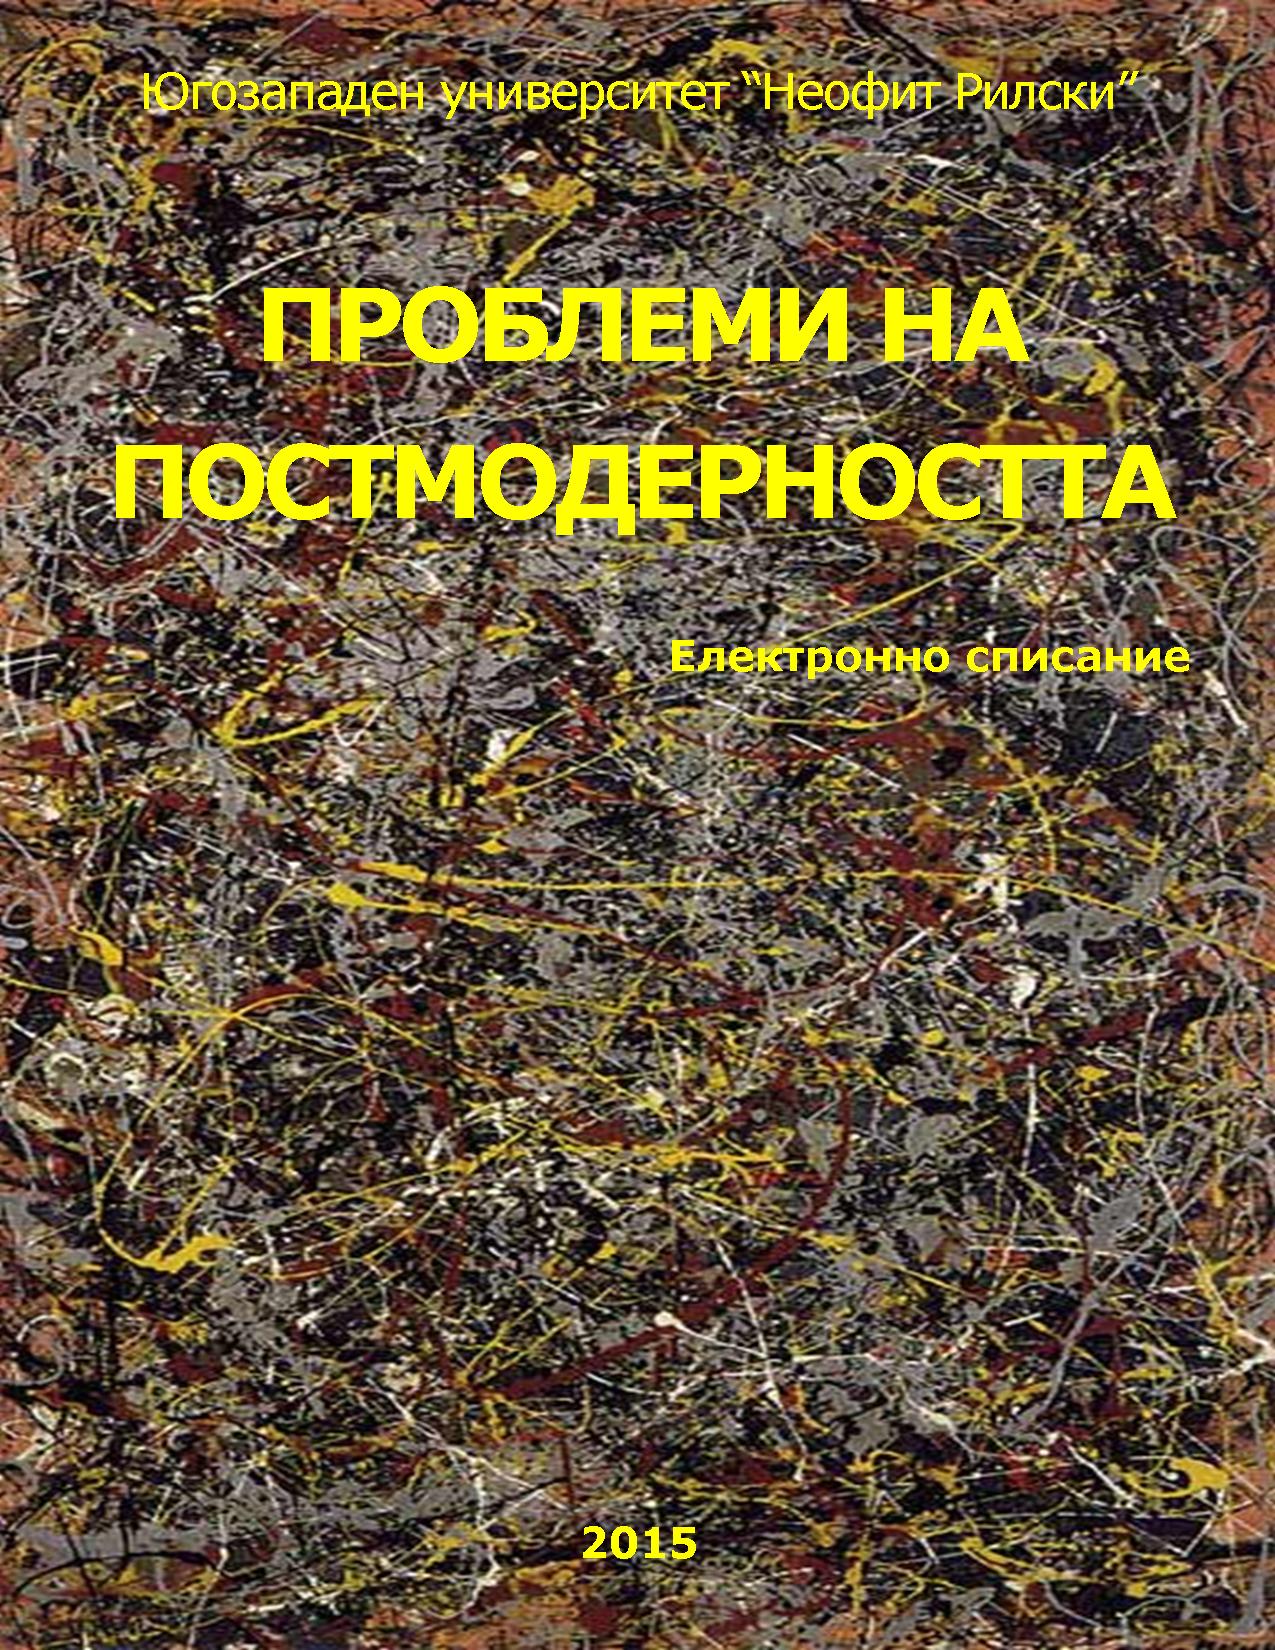 American avant-garde artist Robert Wilson in Europe and the Balkans Cover Image